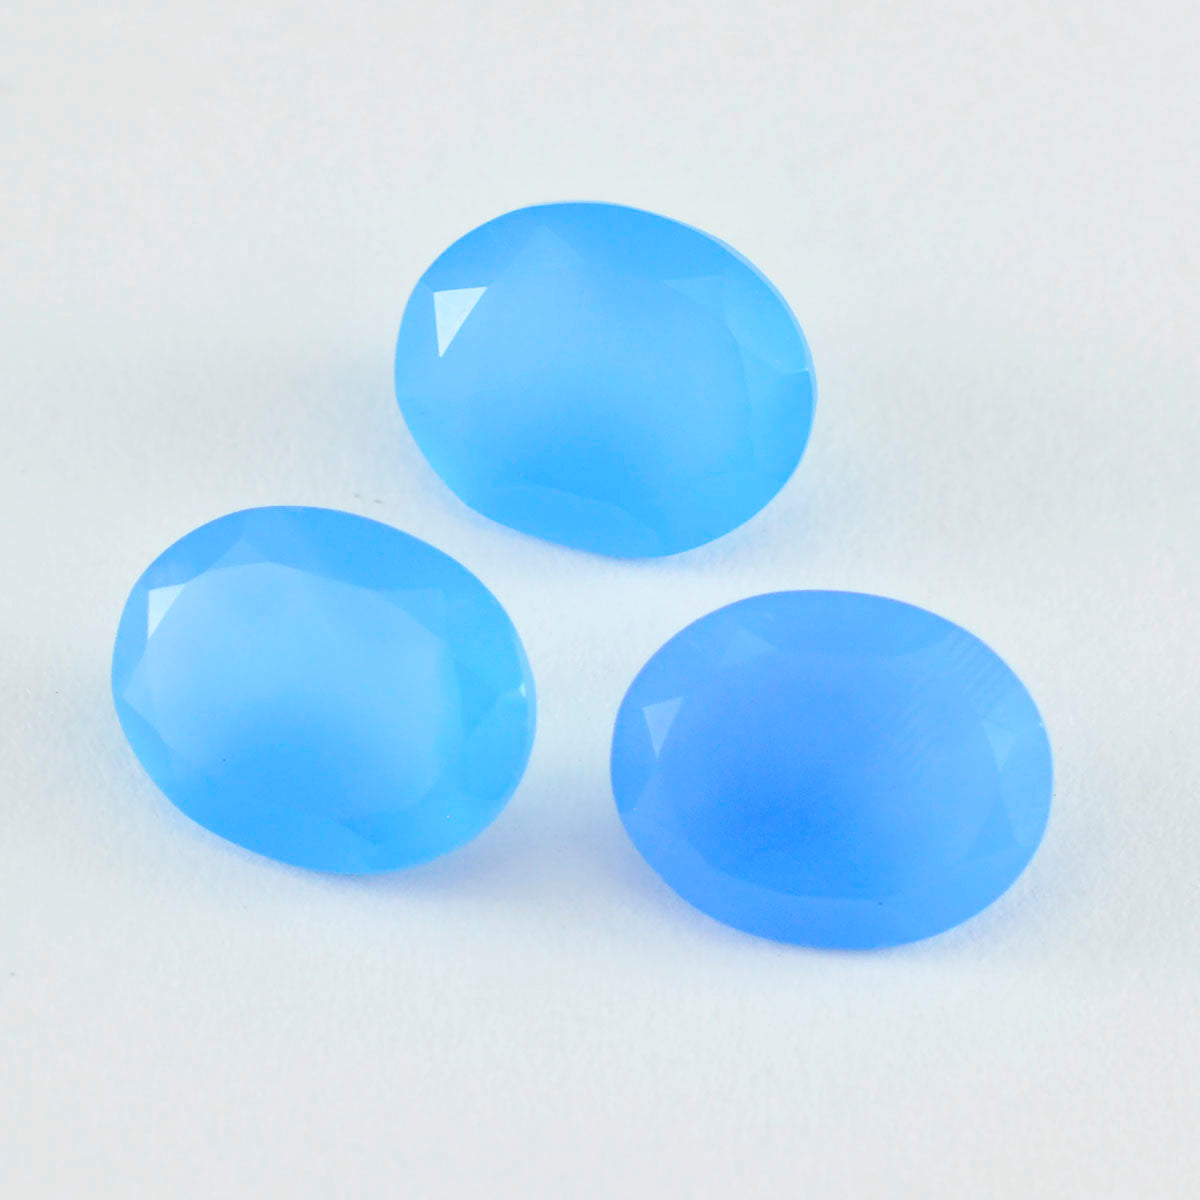 Riyogems 1PC Natural Blue Chalcedony Faceted 10x14 mm Oval Shape astonishing Quality Gemstone